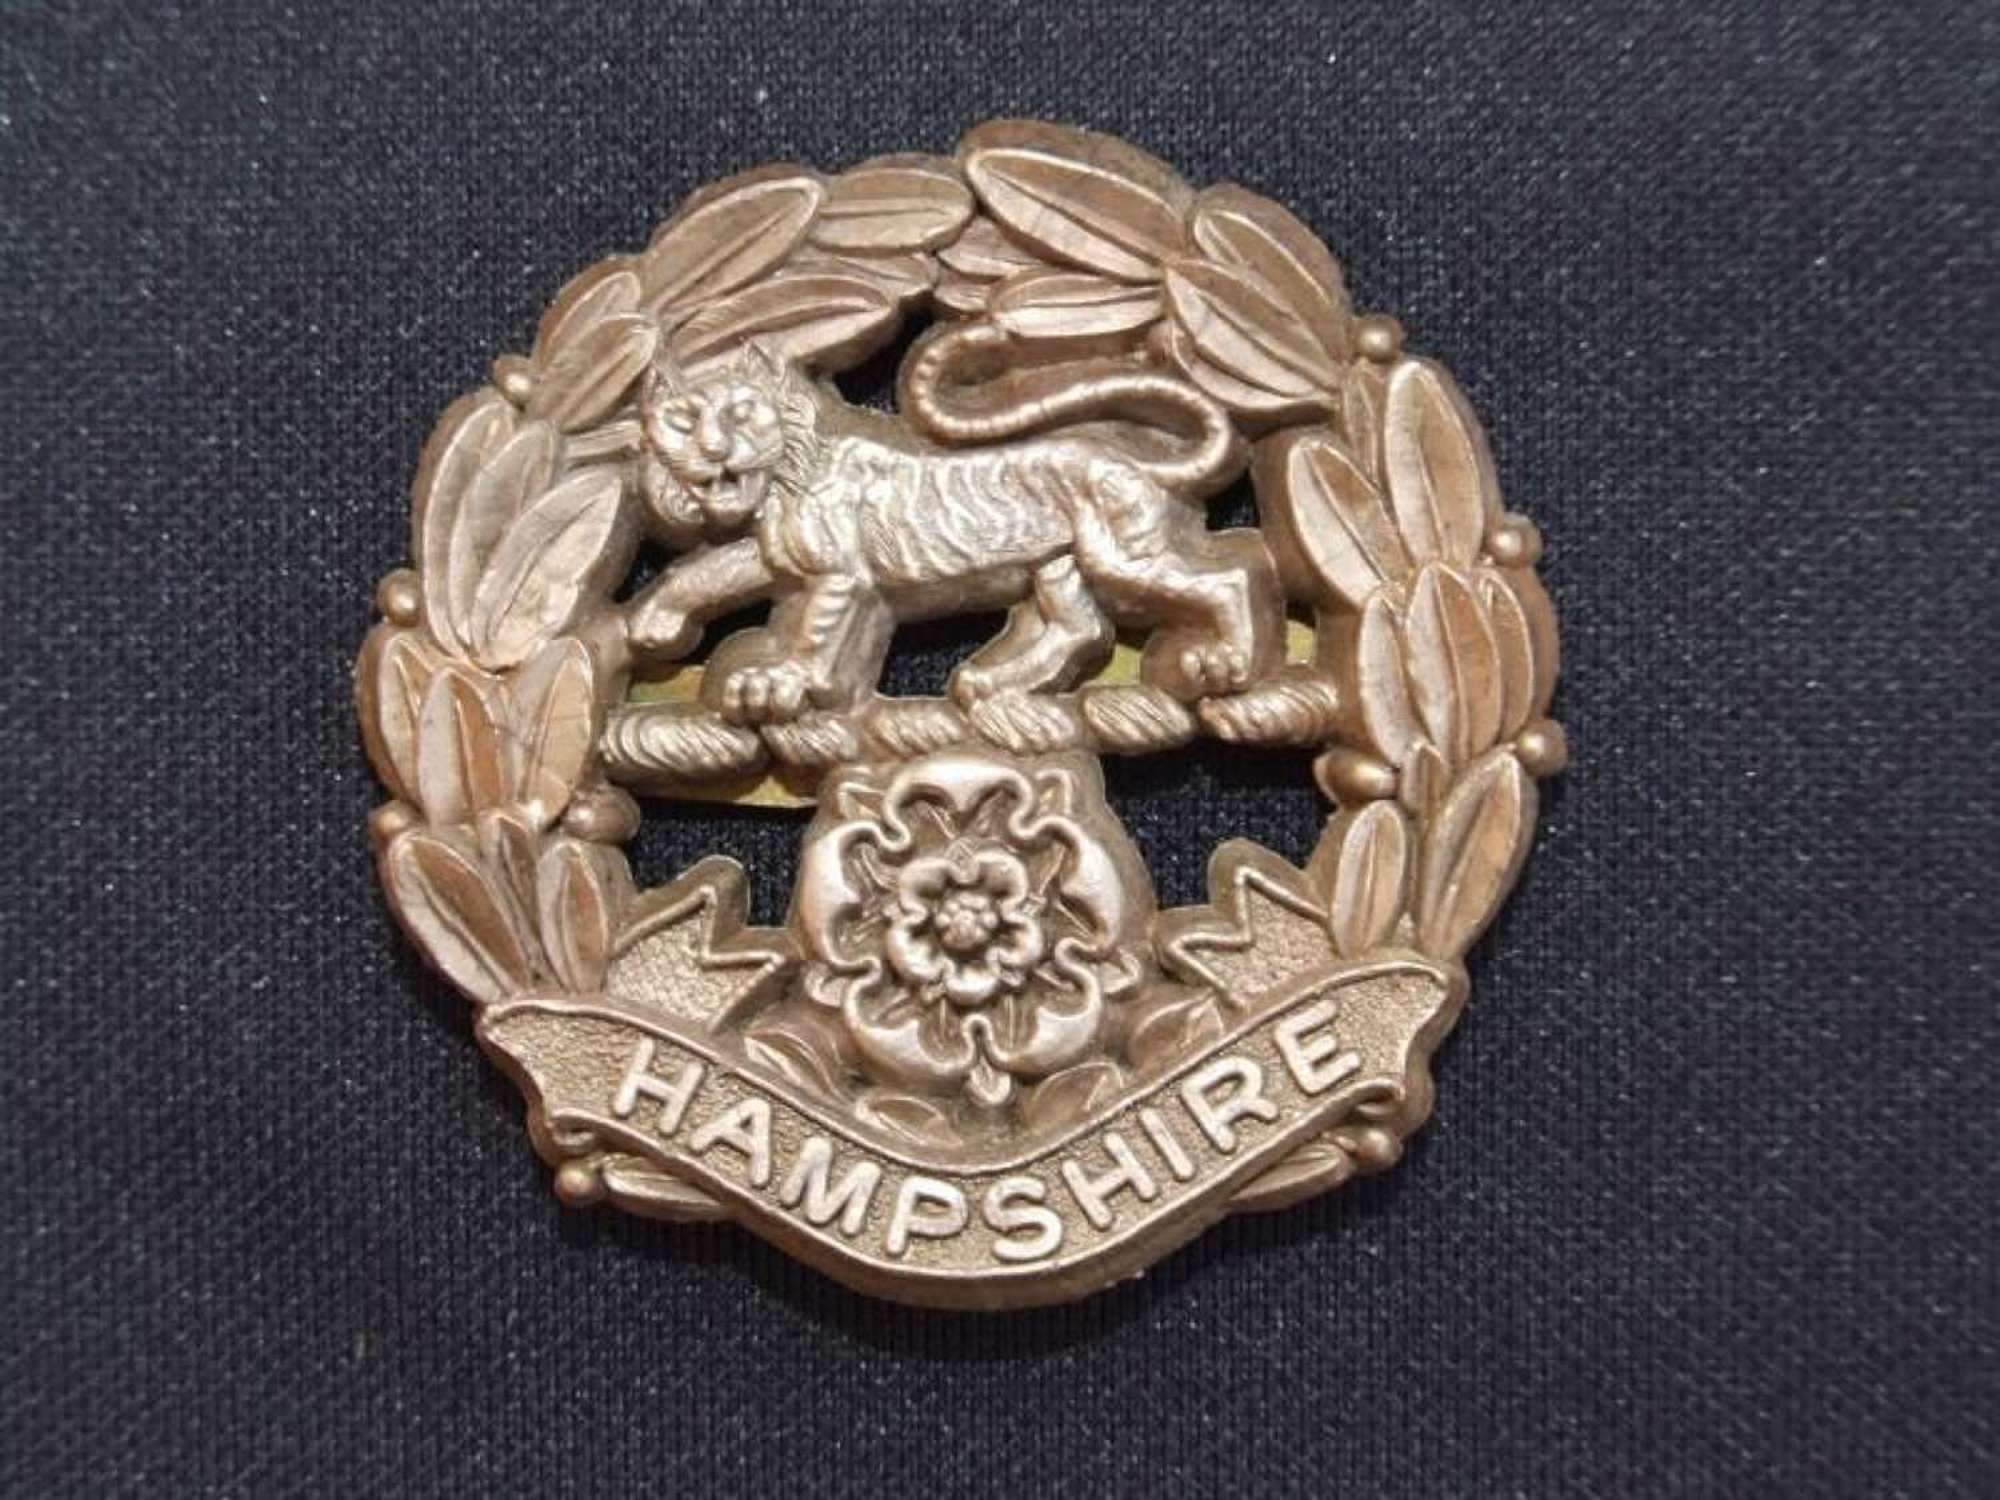 Wartime Plastic Economy Badge - The Hampshire Regiment